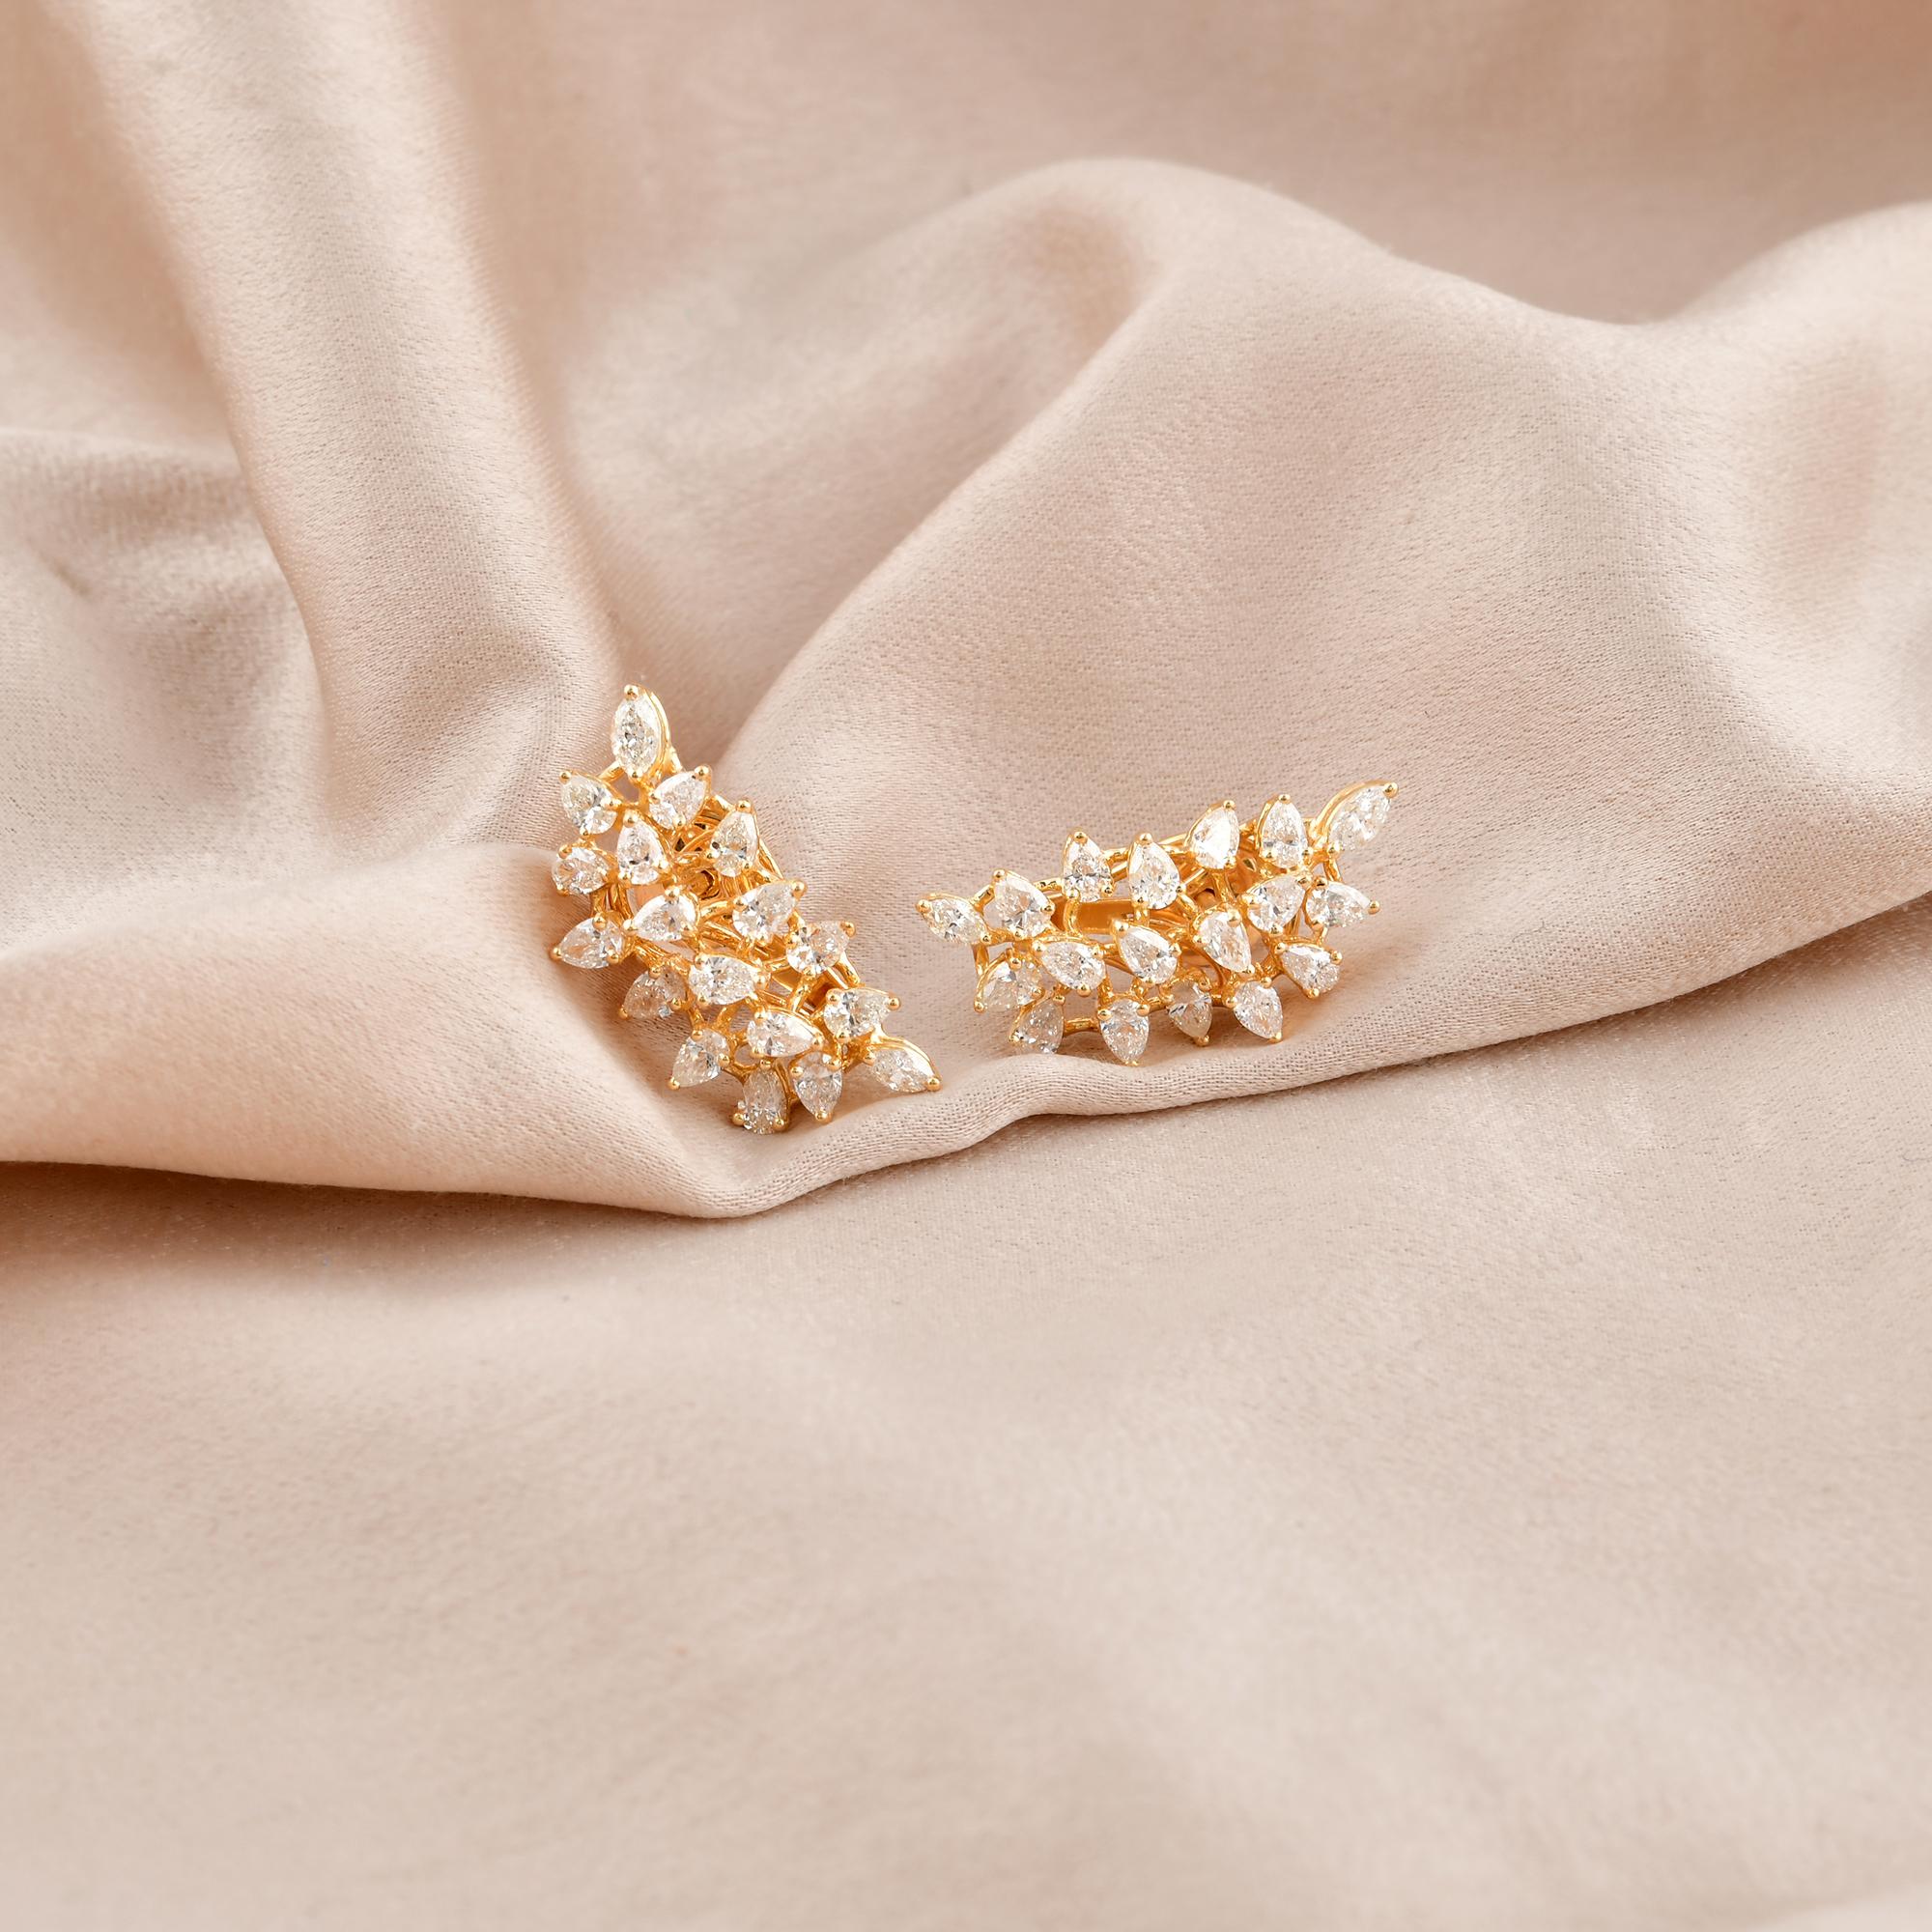 Taille poire 2.9 Carat SI Clarity HI Color Pear Diamond Earrings 14 Karat Yellow Gold Jewelry en vente